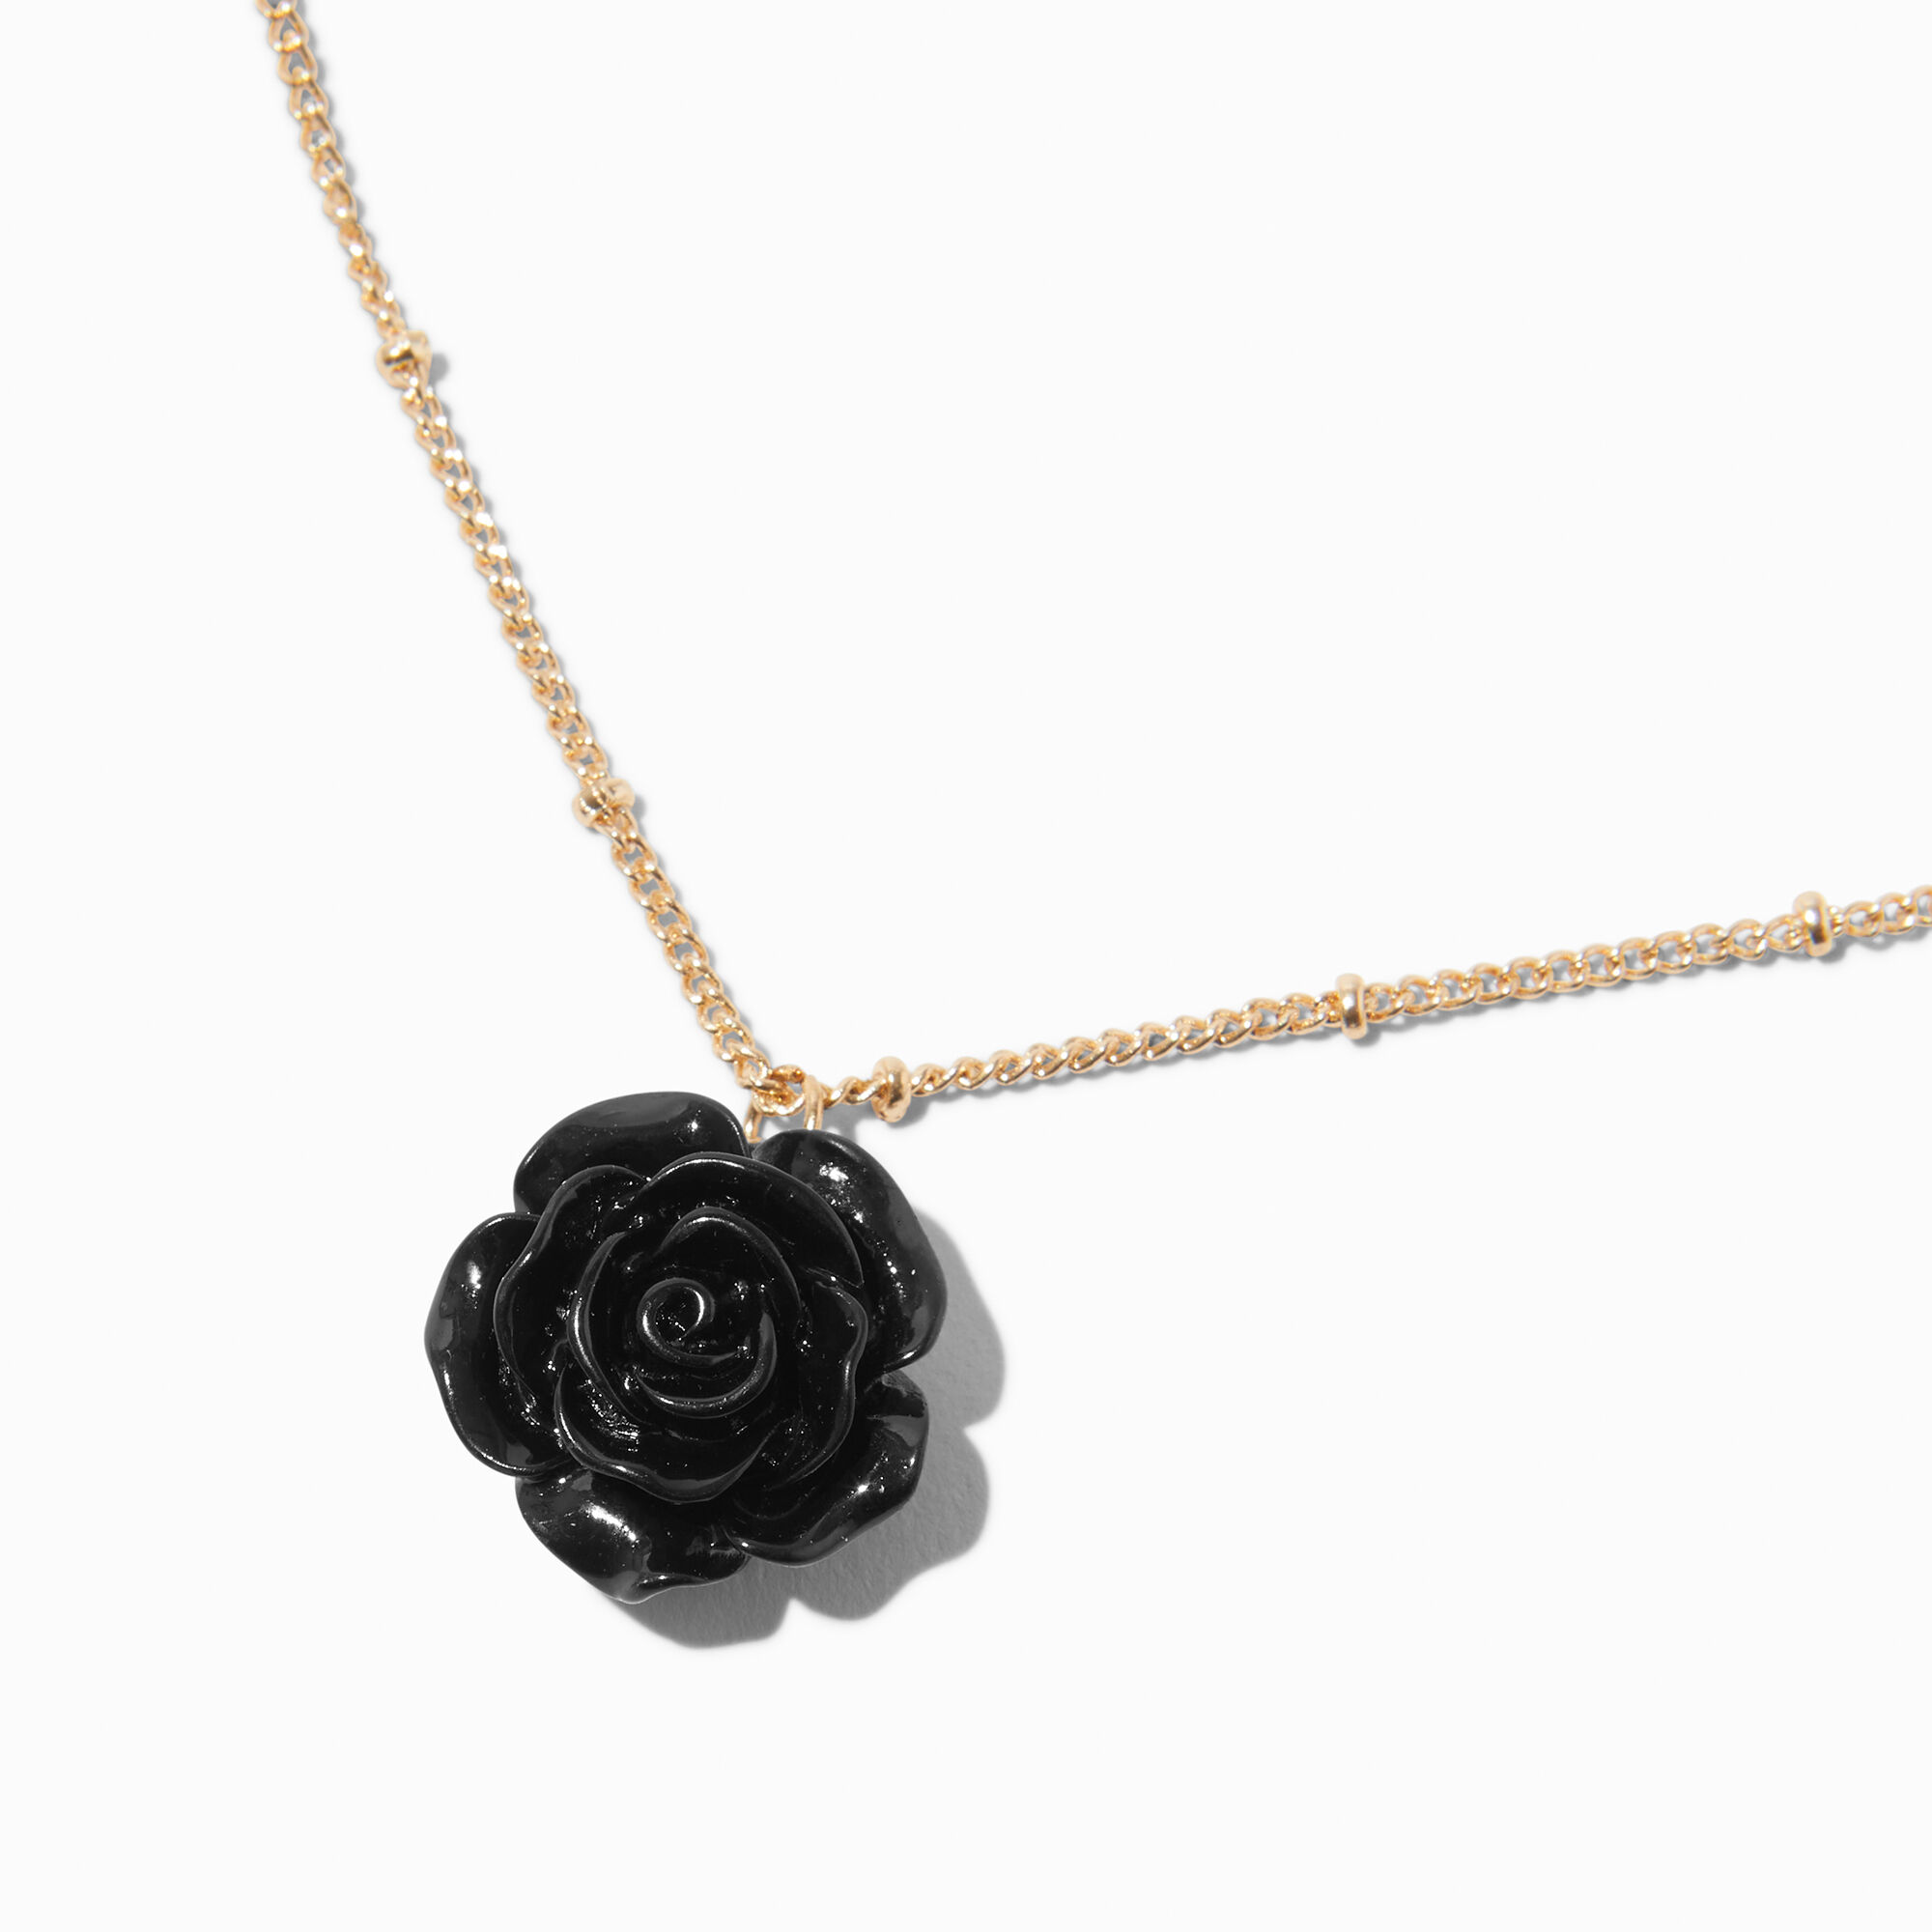 View Claires Carved Rose GoldTone Pendant Necklace Black information